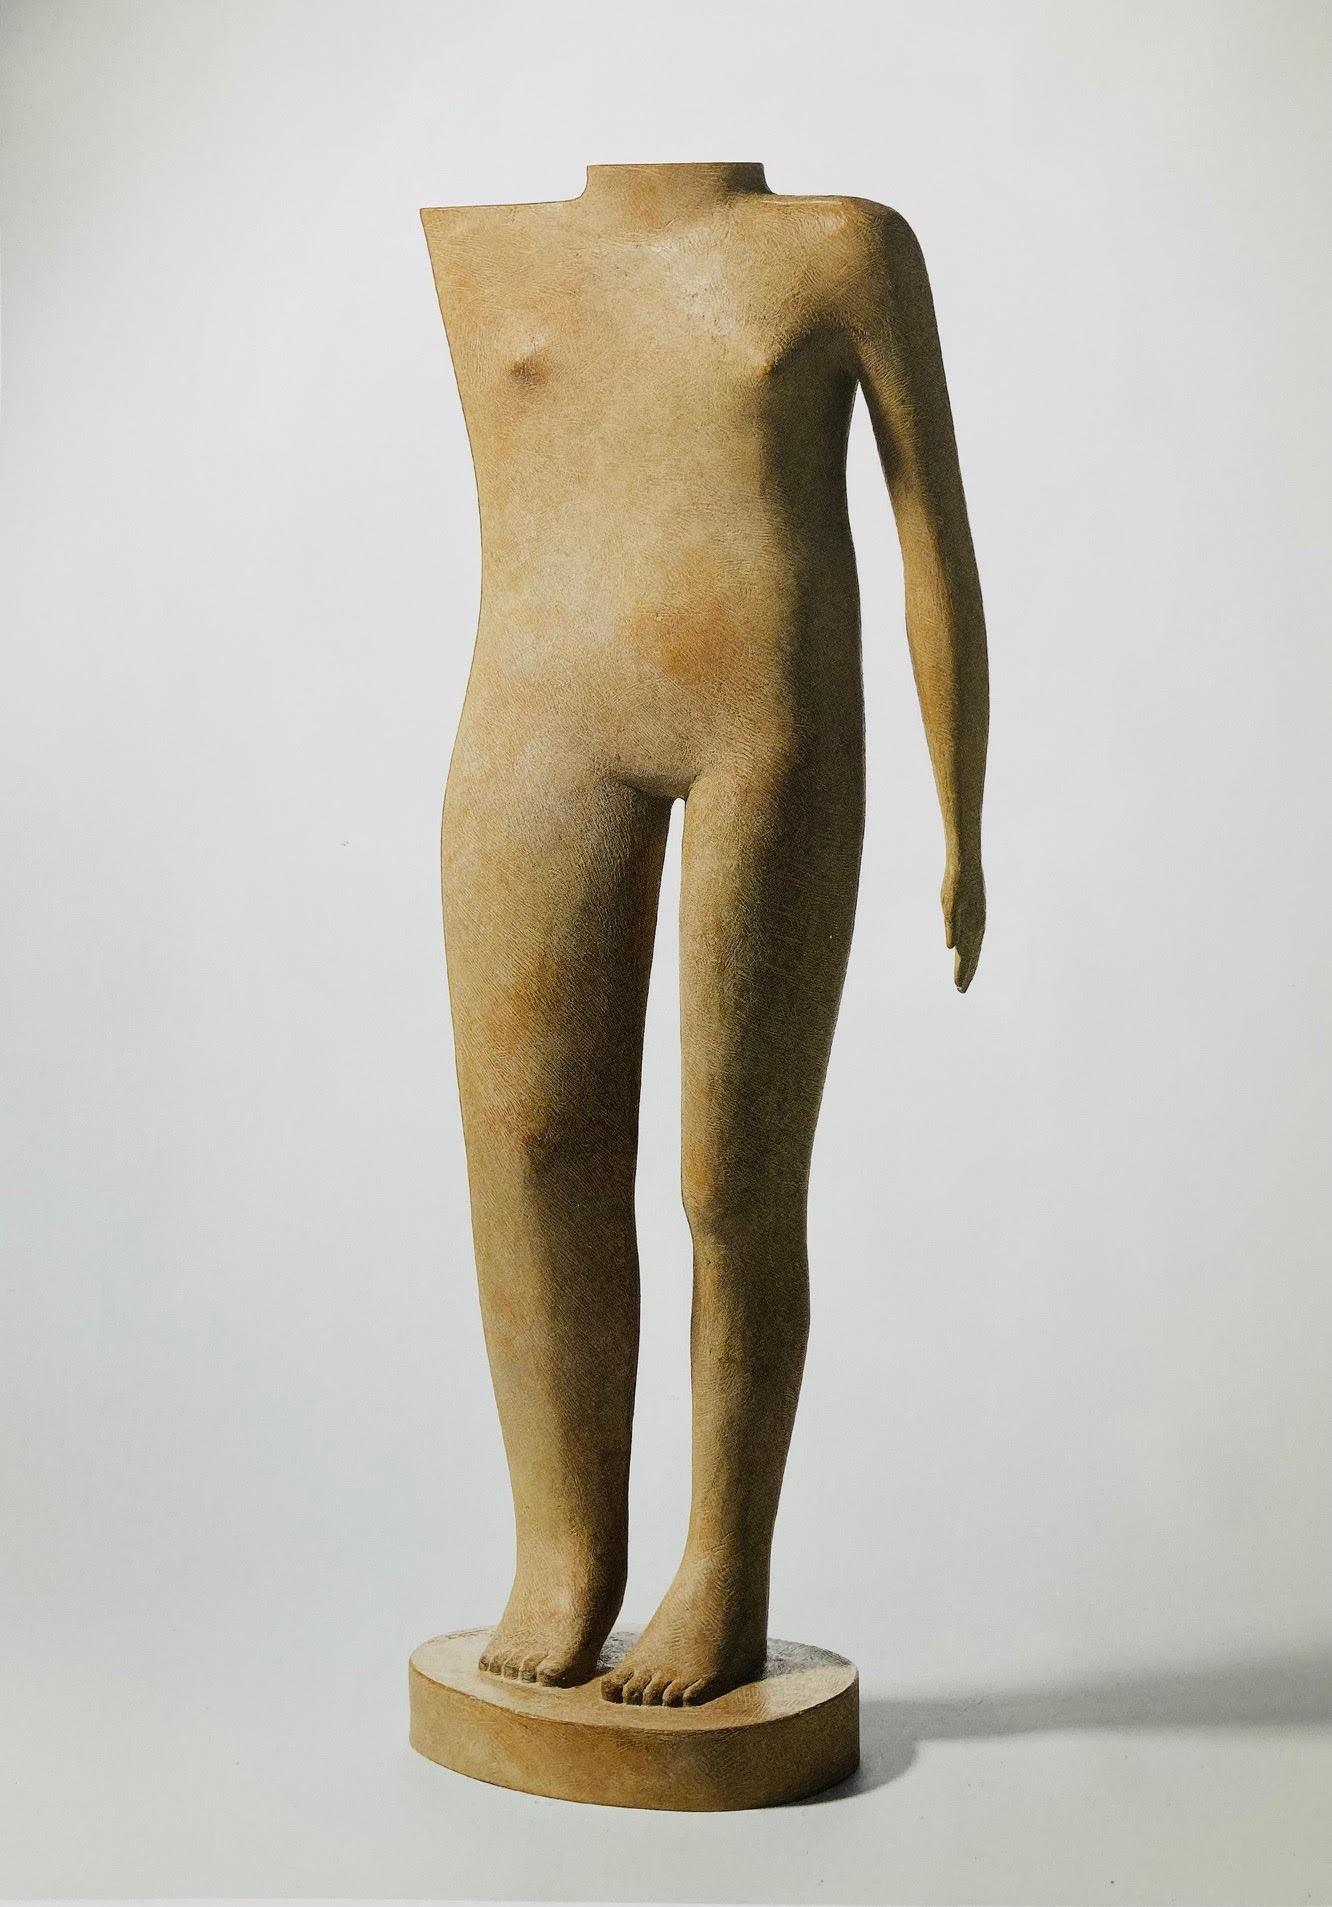 Puberta Stehende Figur Bronzeskulptur Nackter Körper 